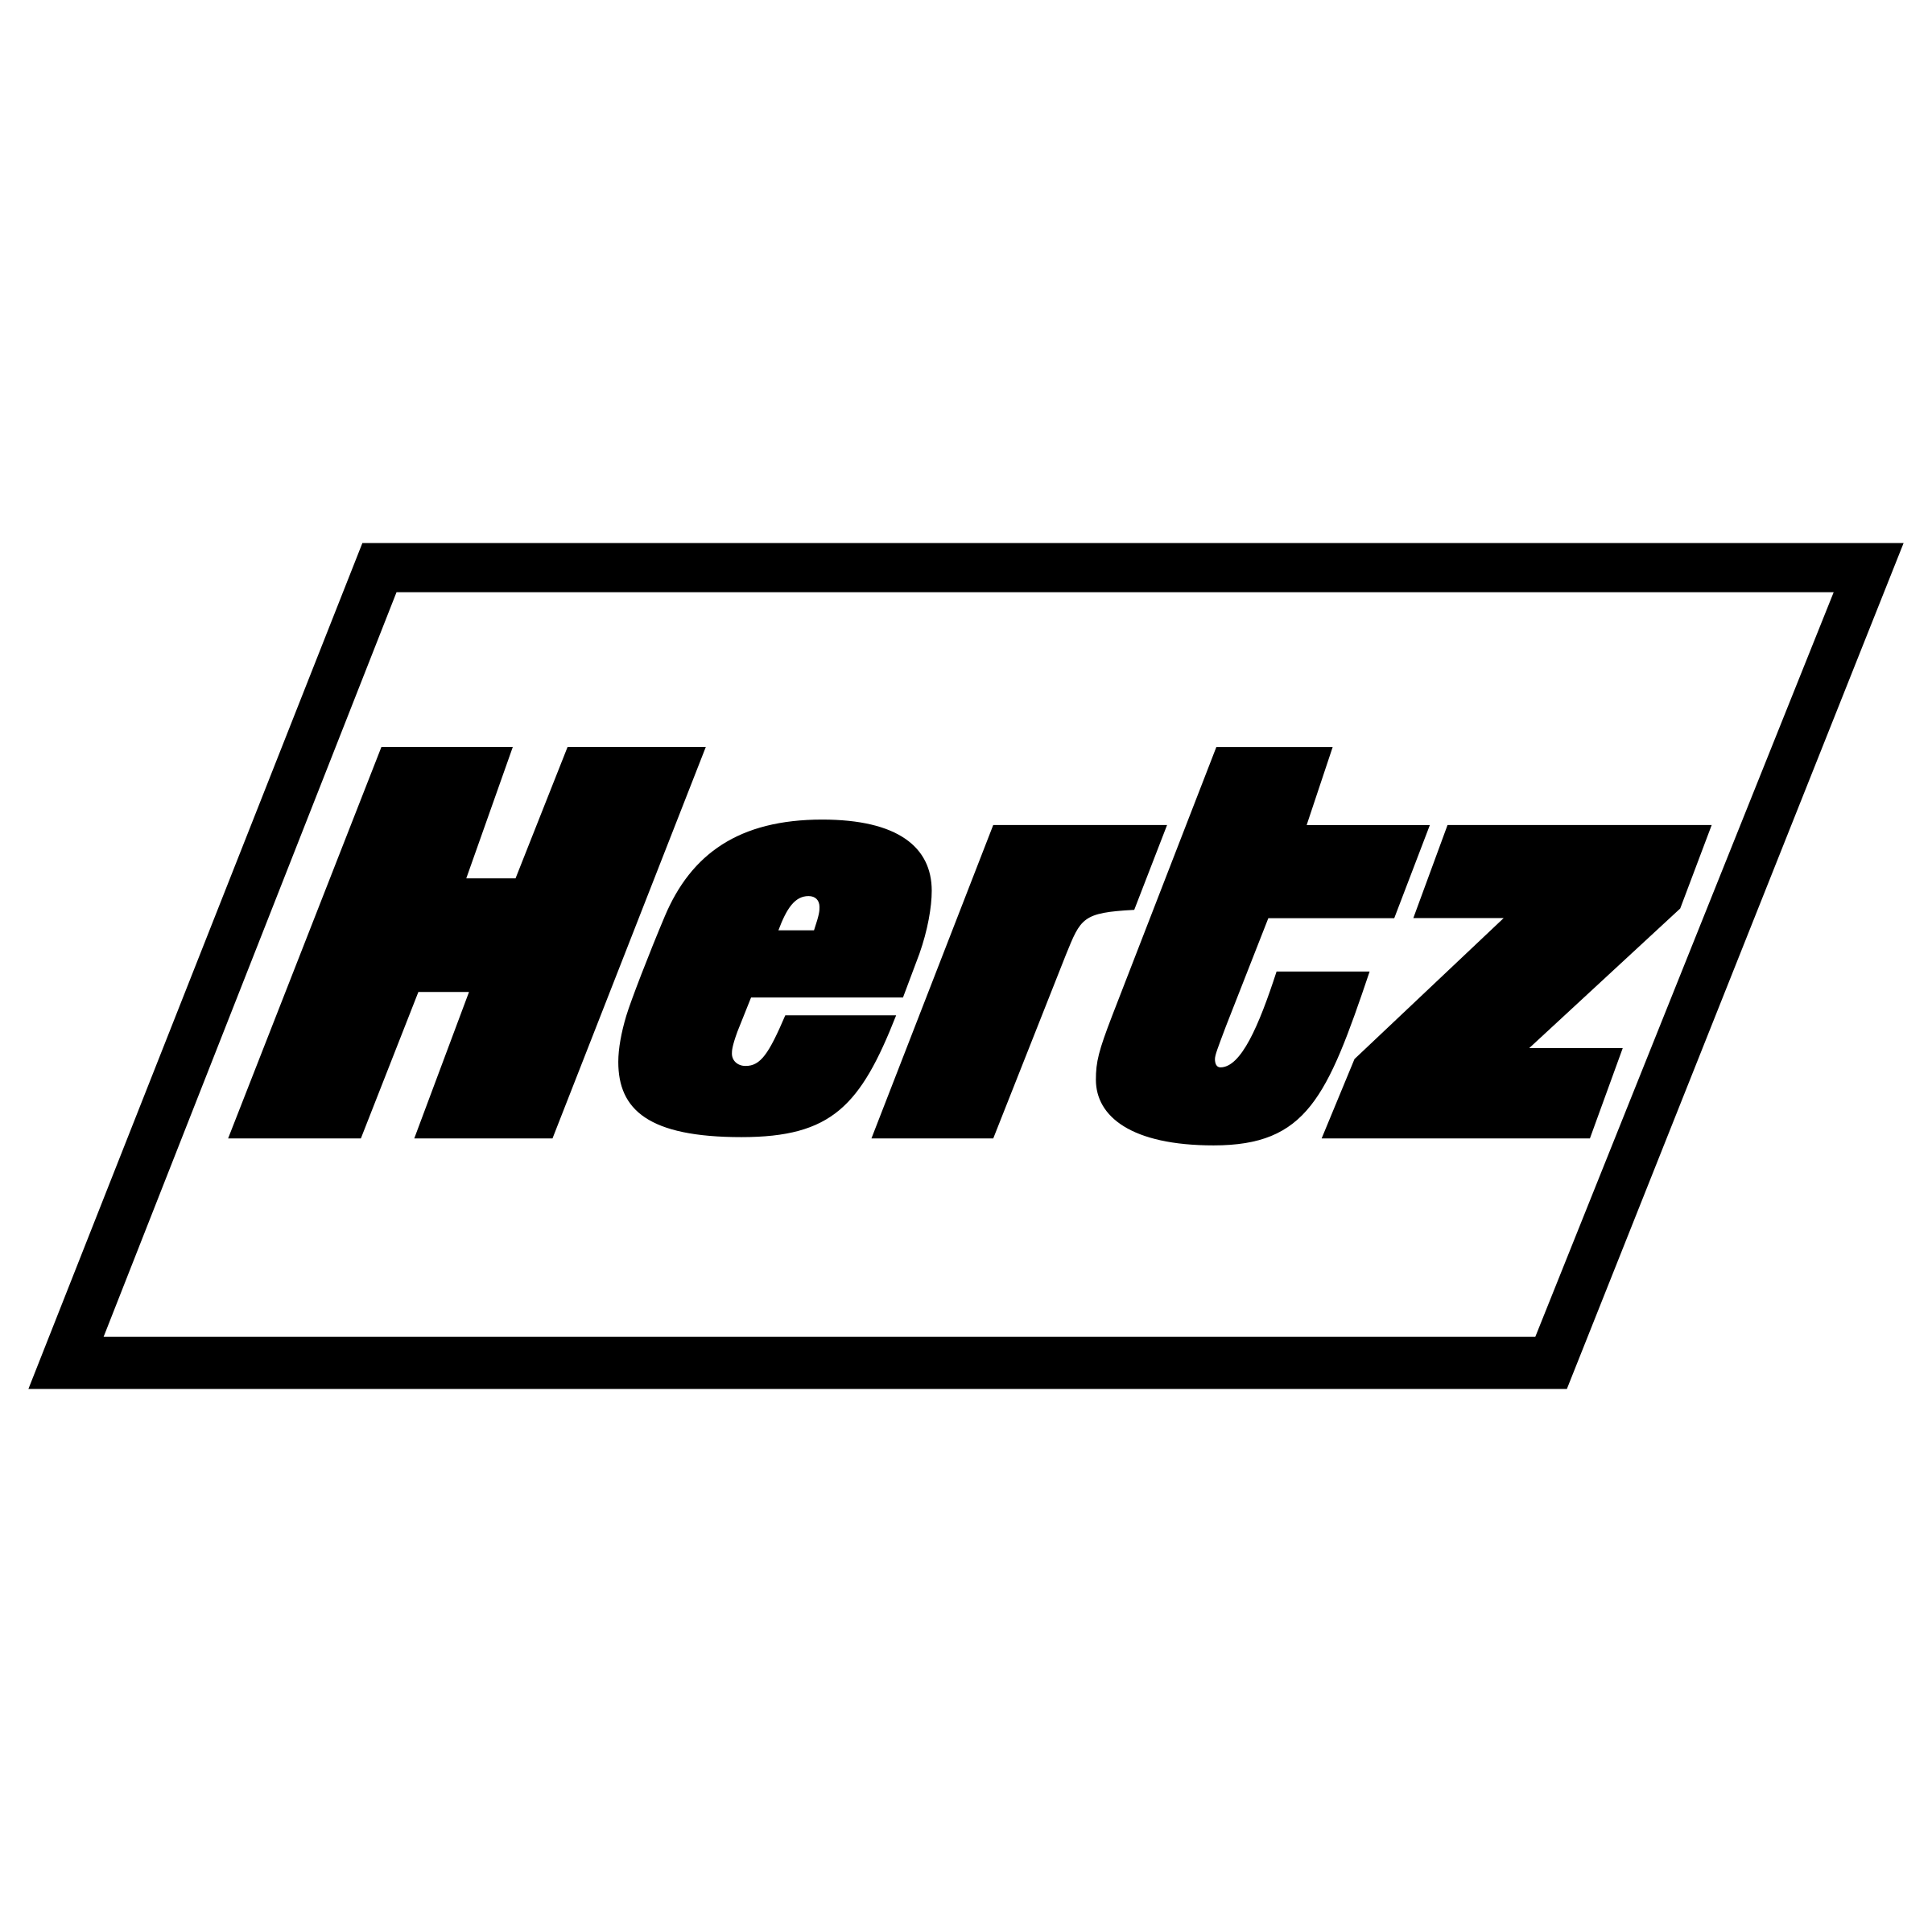 Hertz Logo - Hertz Logo PNG Transparent & SVG Vector - Freebie Supply